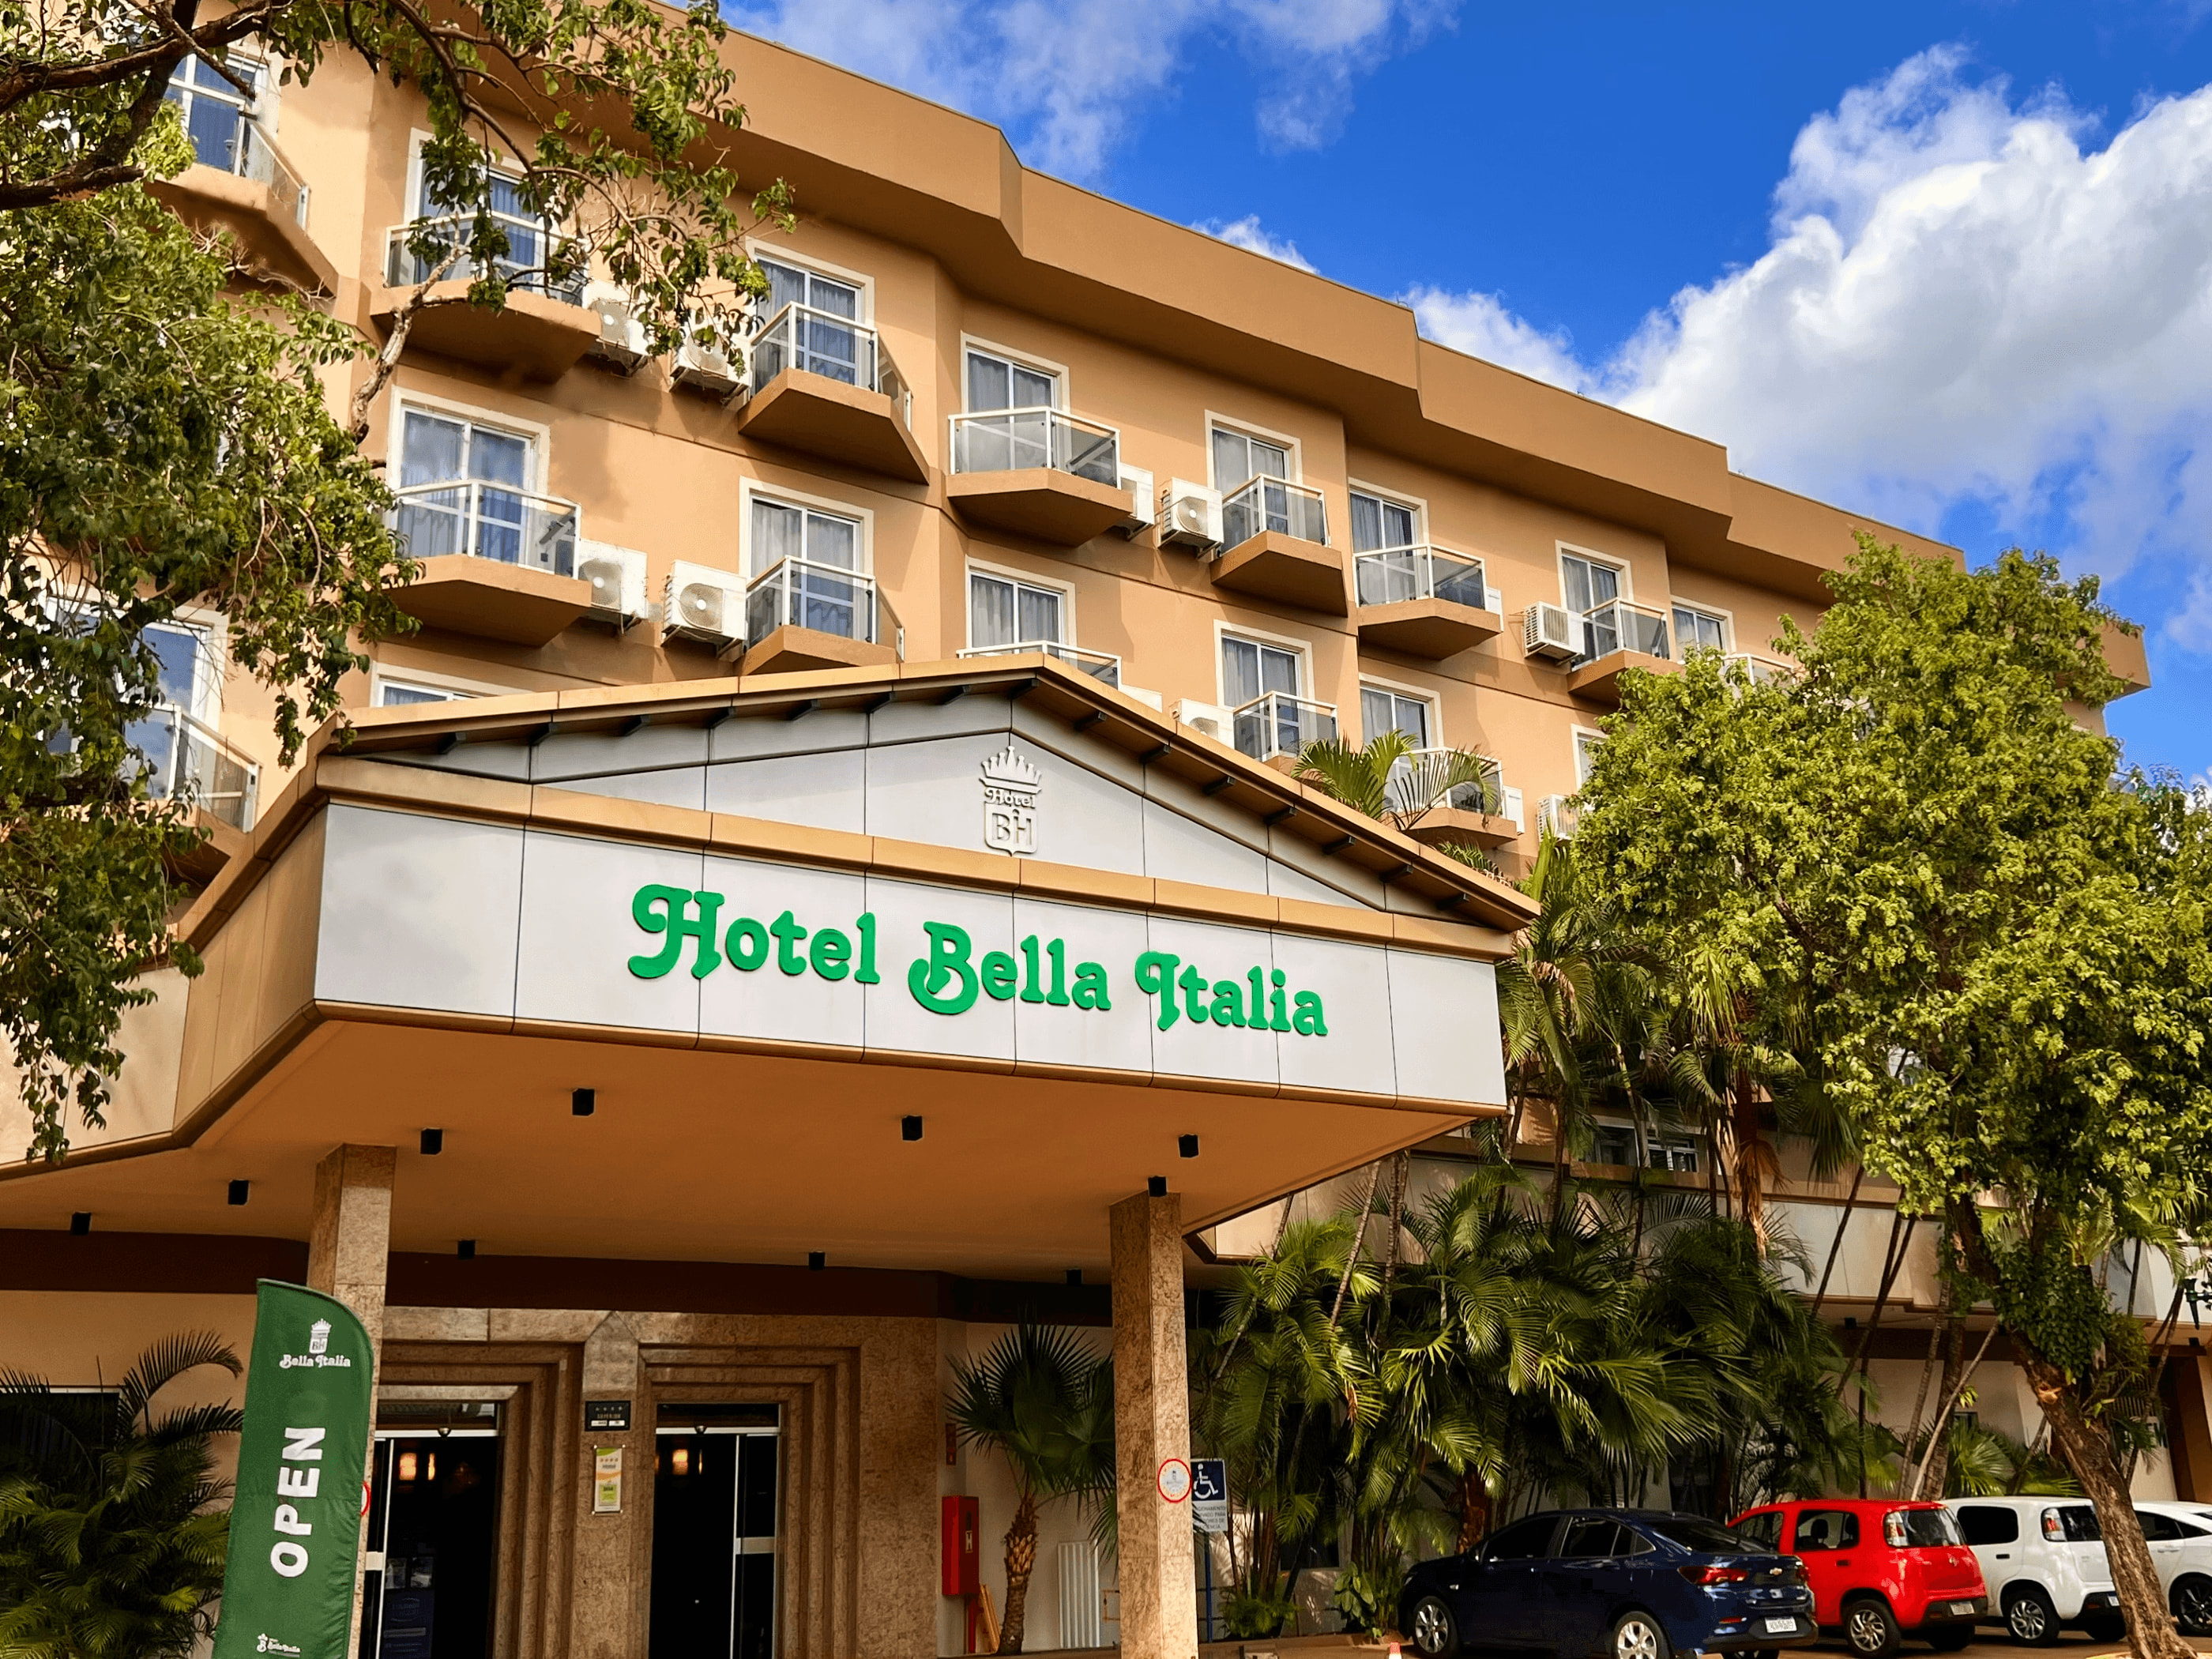 Hotel Bella Italia image